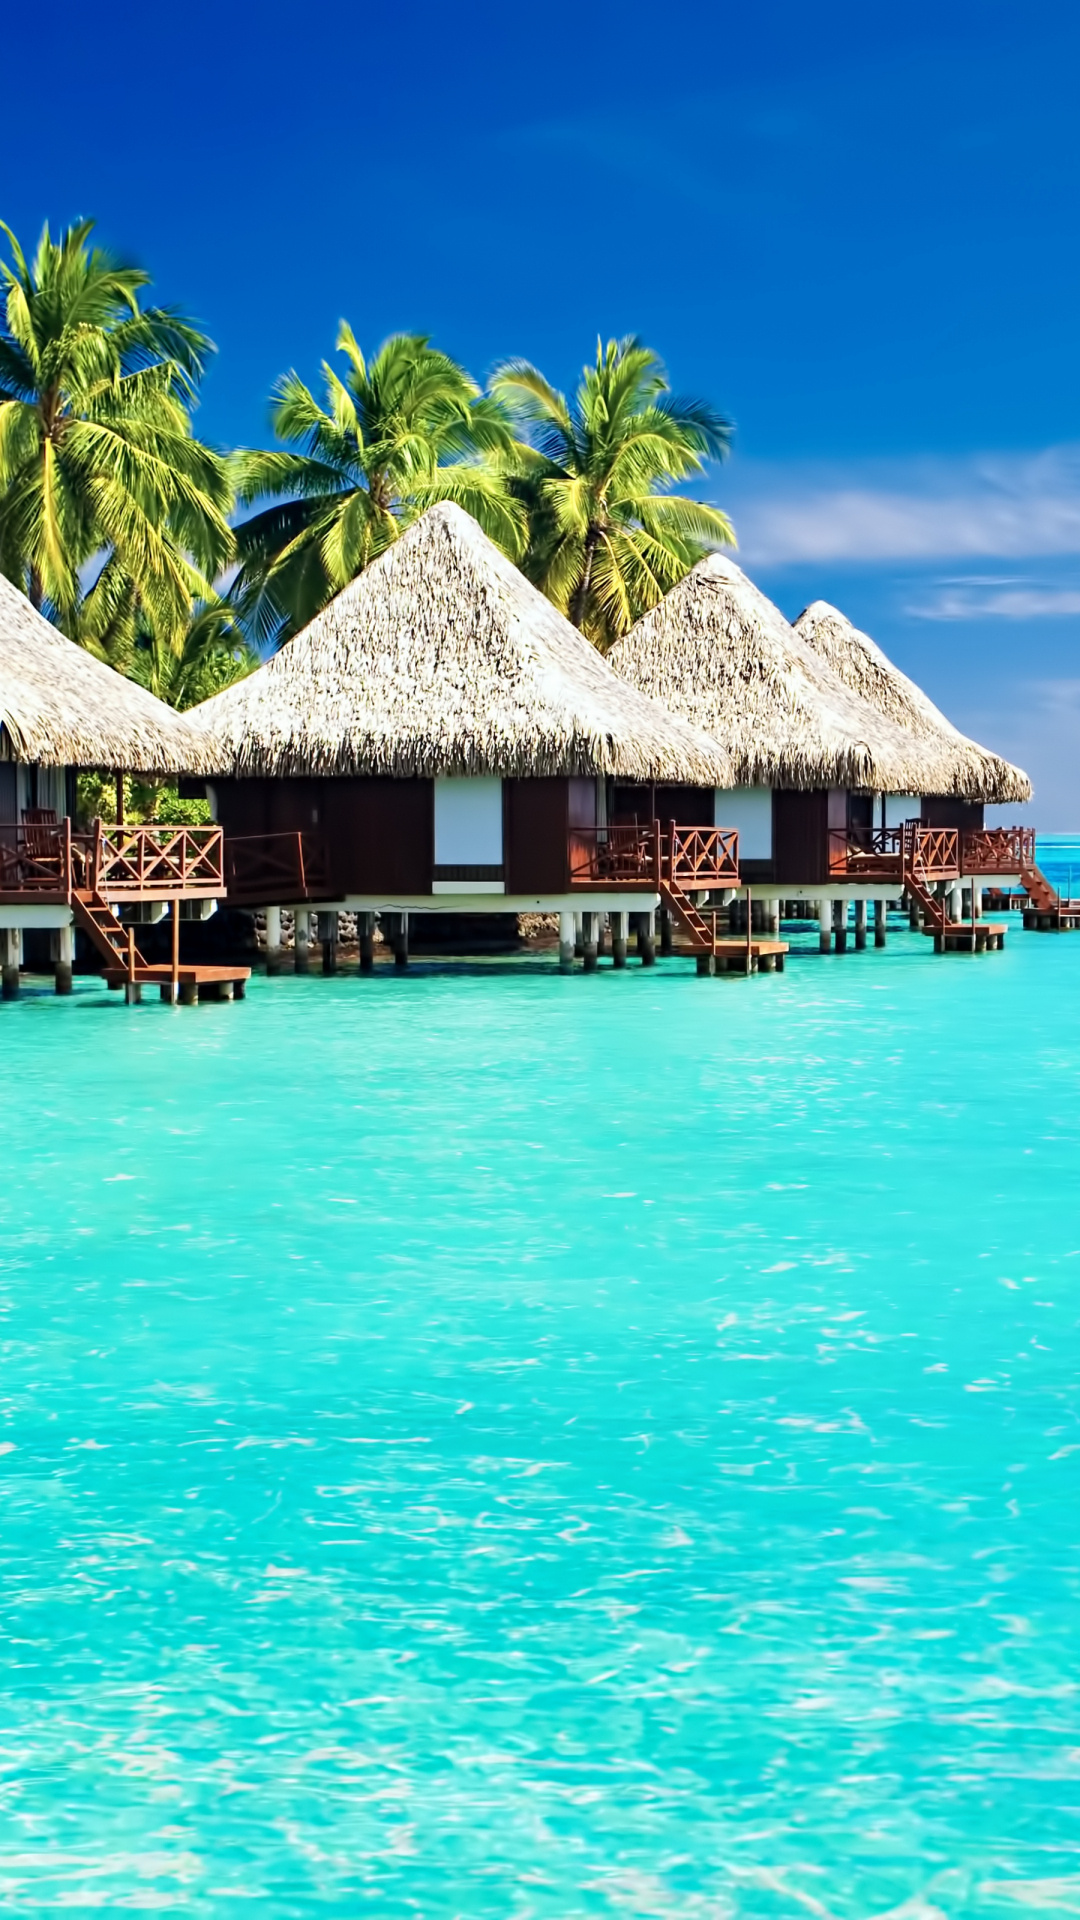 Fiji: The archipelago has 6 national parks, Eco hotel. 1080x1920 Full HD Wallpaper.